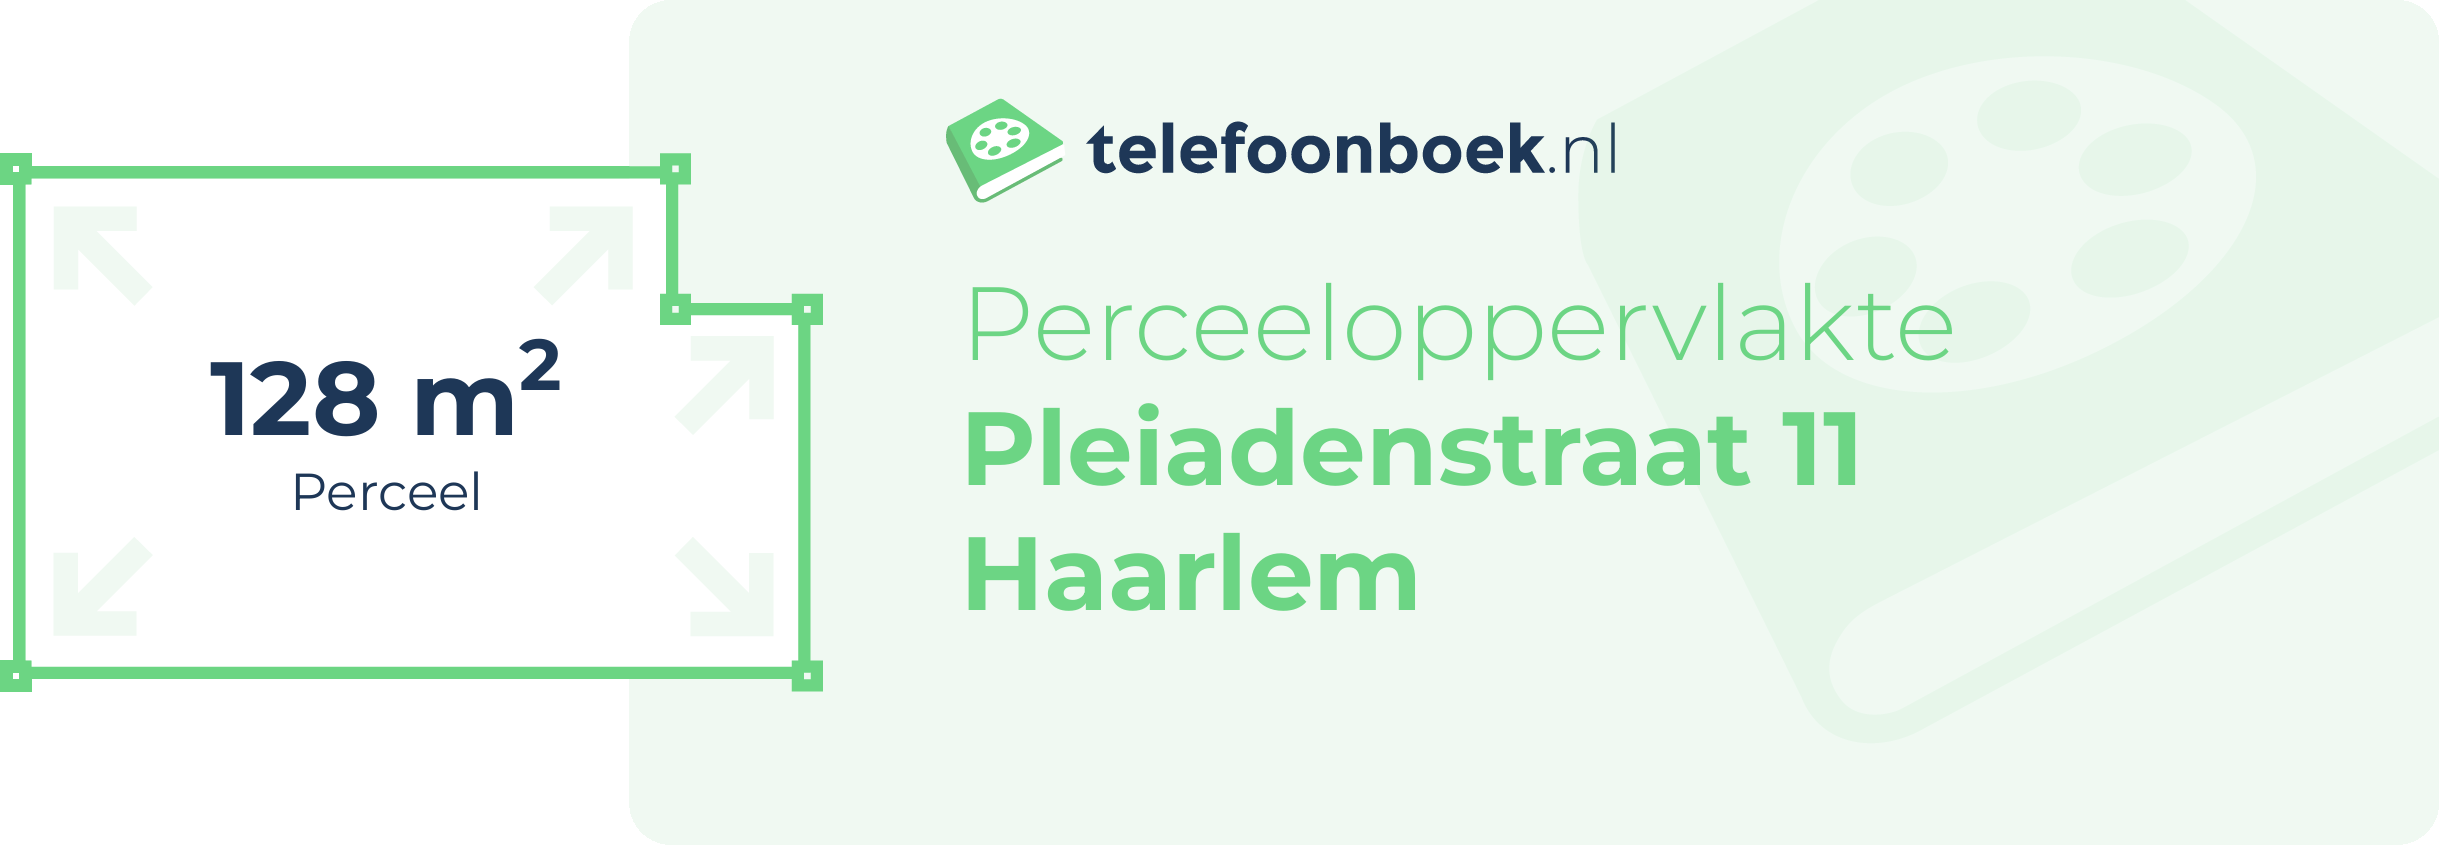 Perceeloppervlakte Pleiadenstraat 11 Haarlem